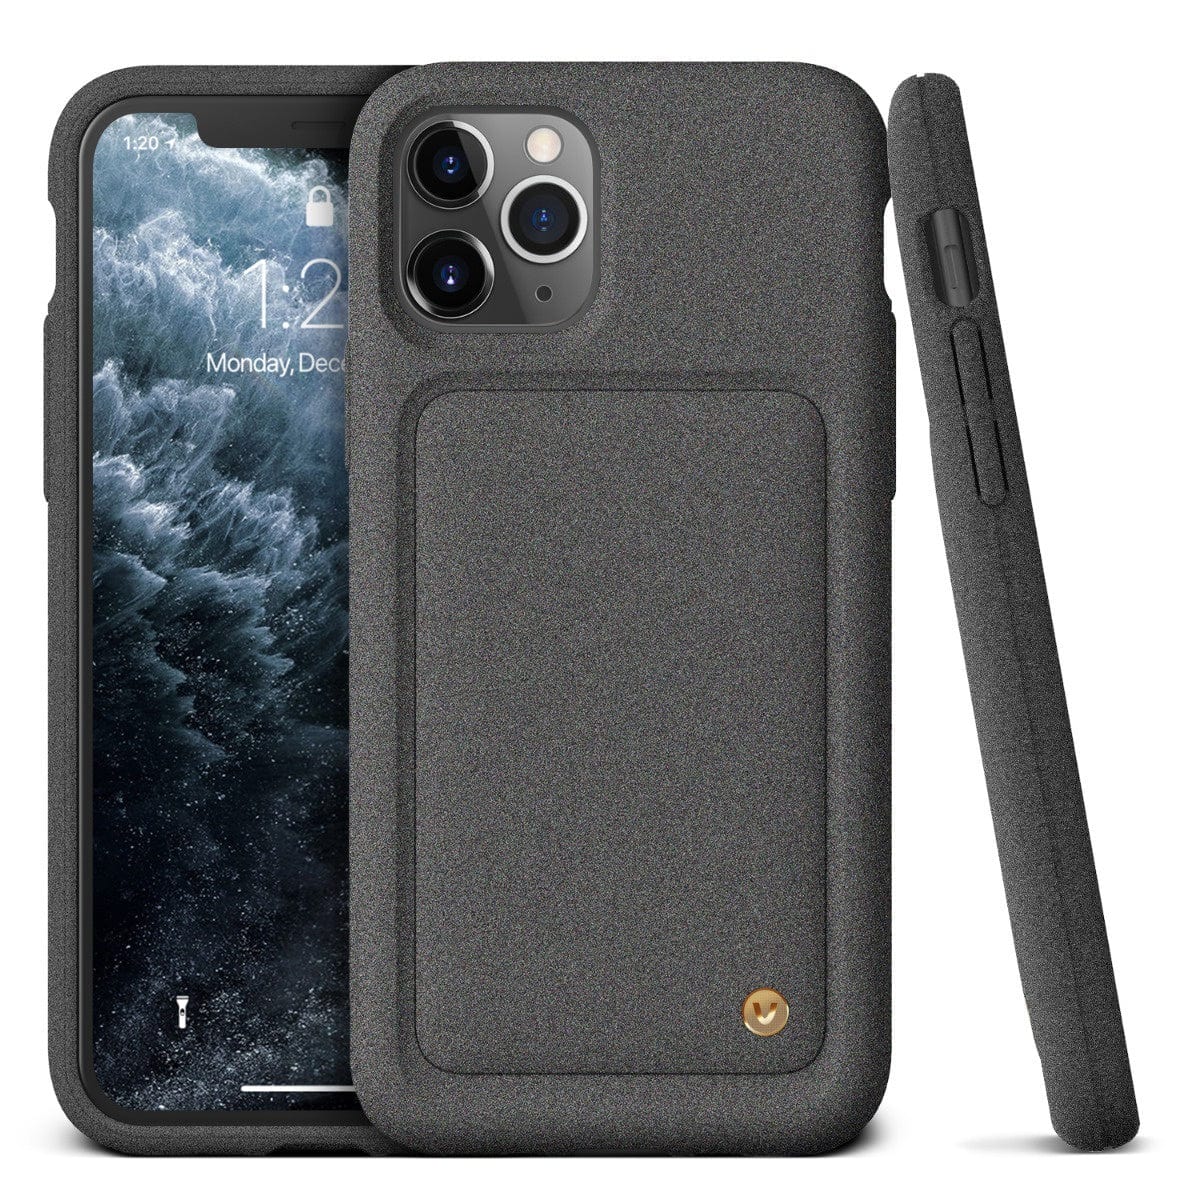 iPhone 11 Pro Max Damda High Pro Shield Sand Stone Case By VRS Design